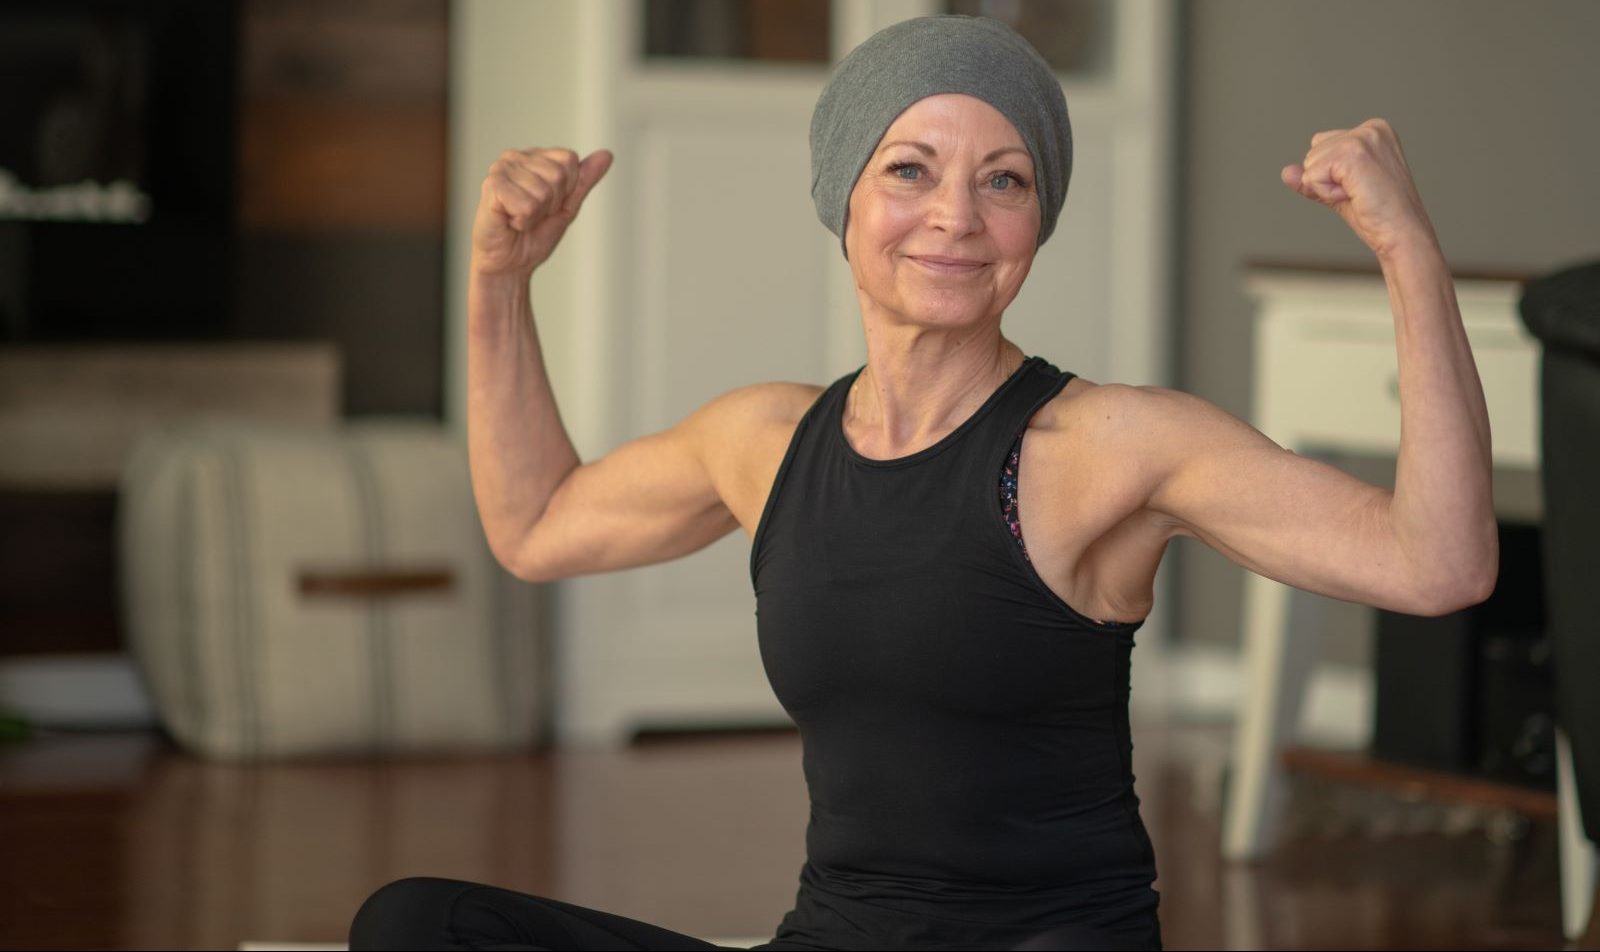 Cancer survivor flexes her muscles.